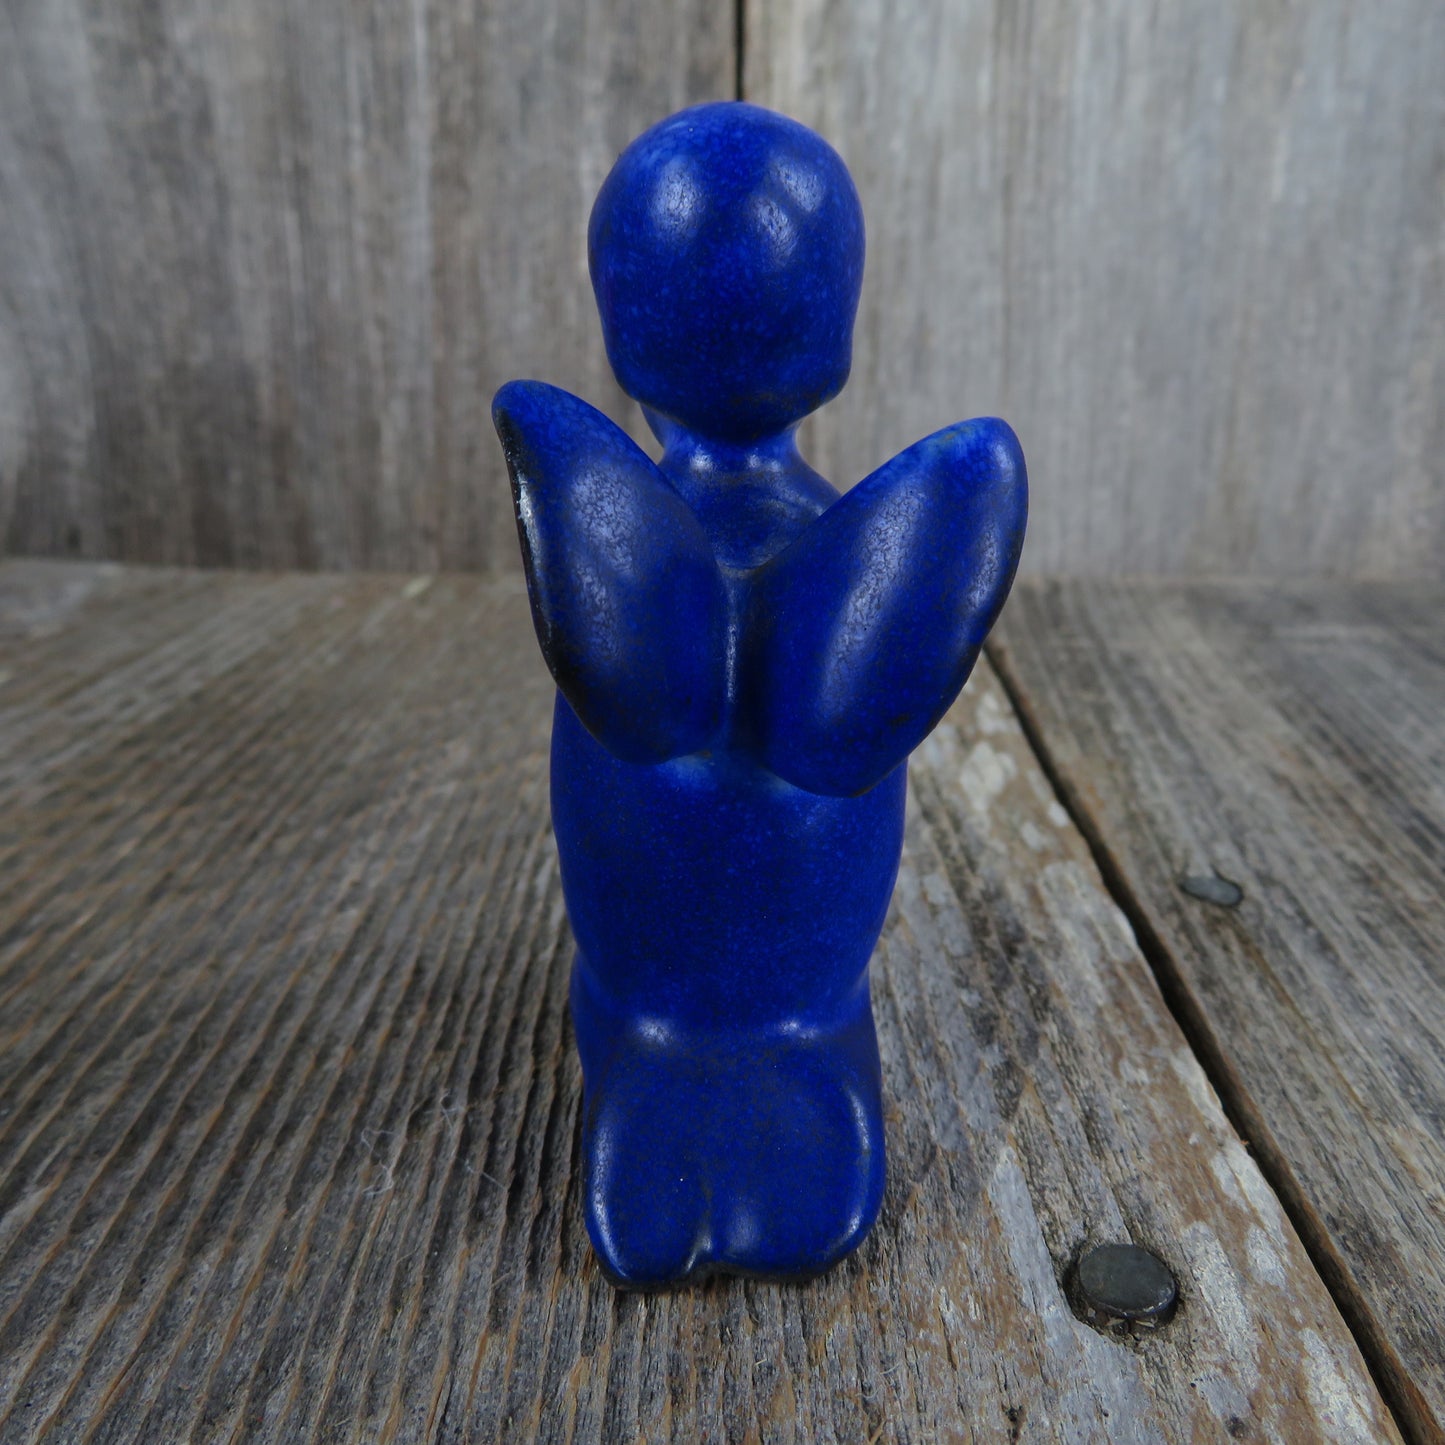 Vintage Kneeling Angel Figurine Gotek Colonia Tovar Praying Blue Glazed Venezuela Clay - At Grandma's Table